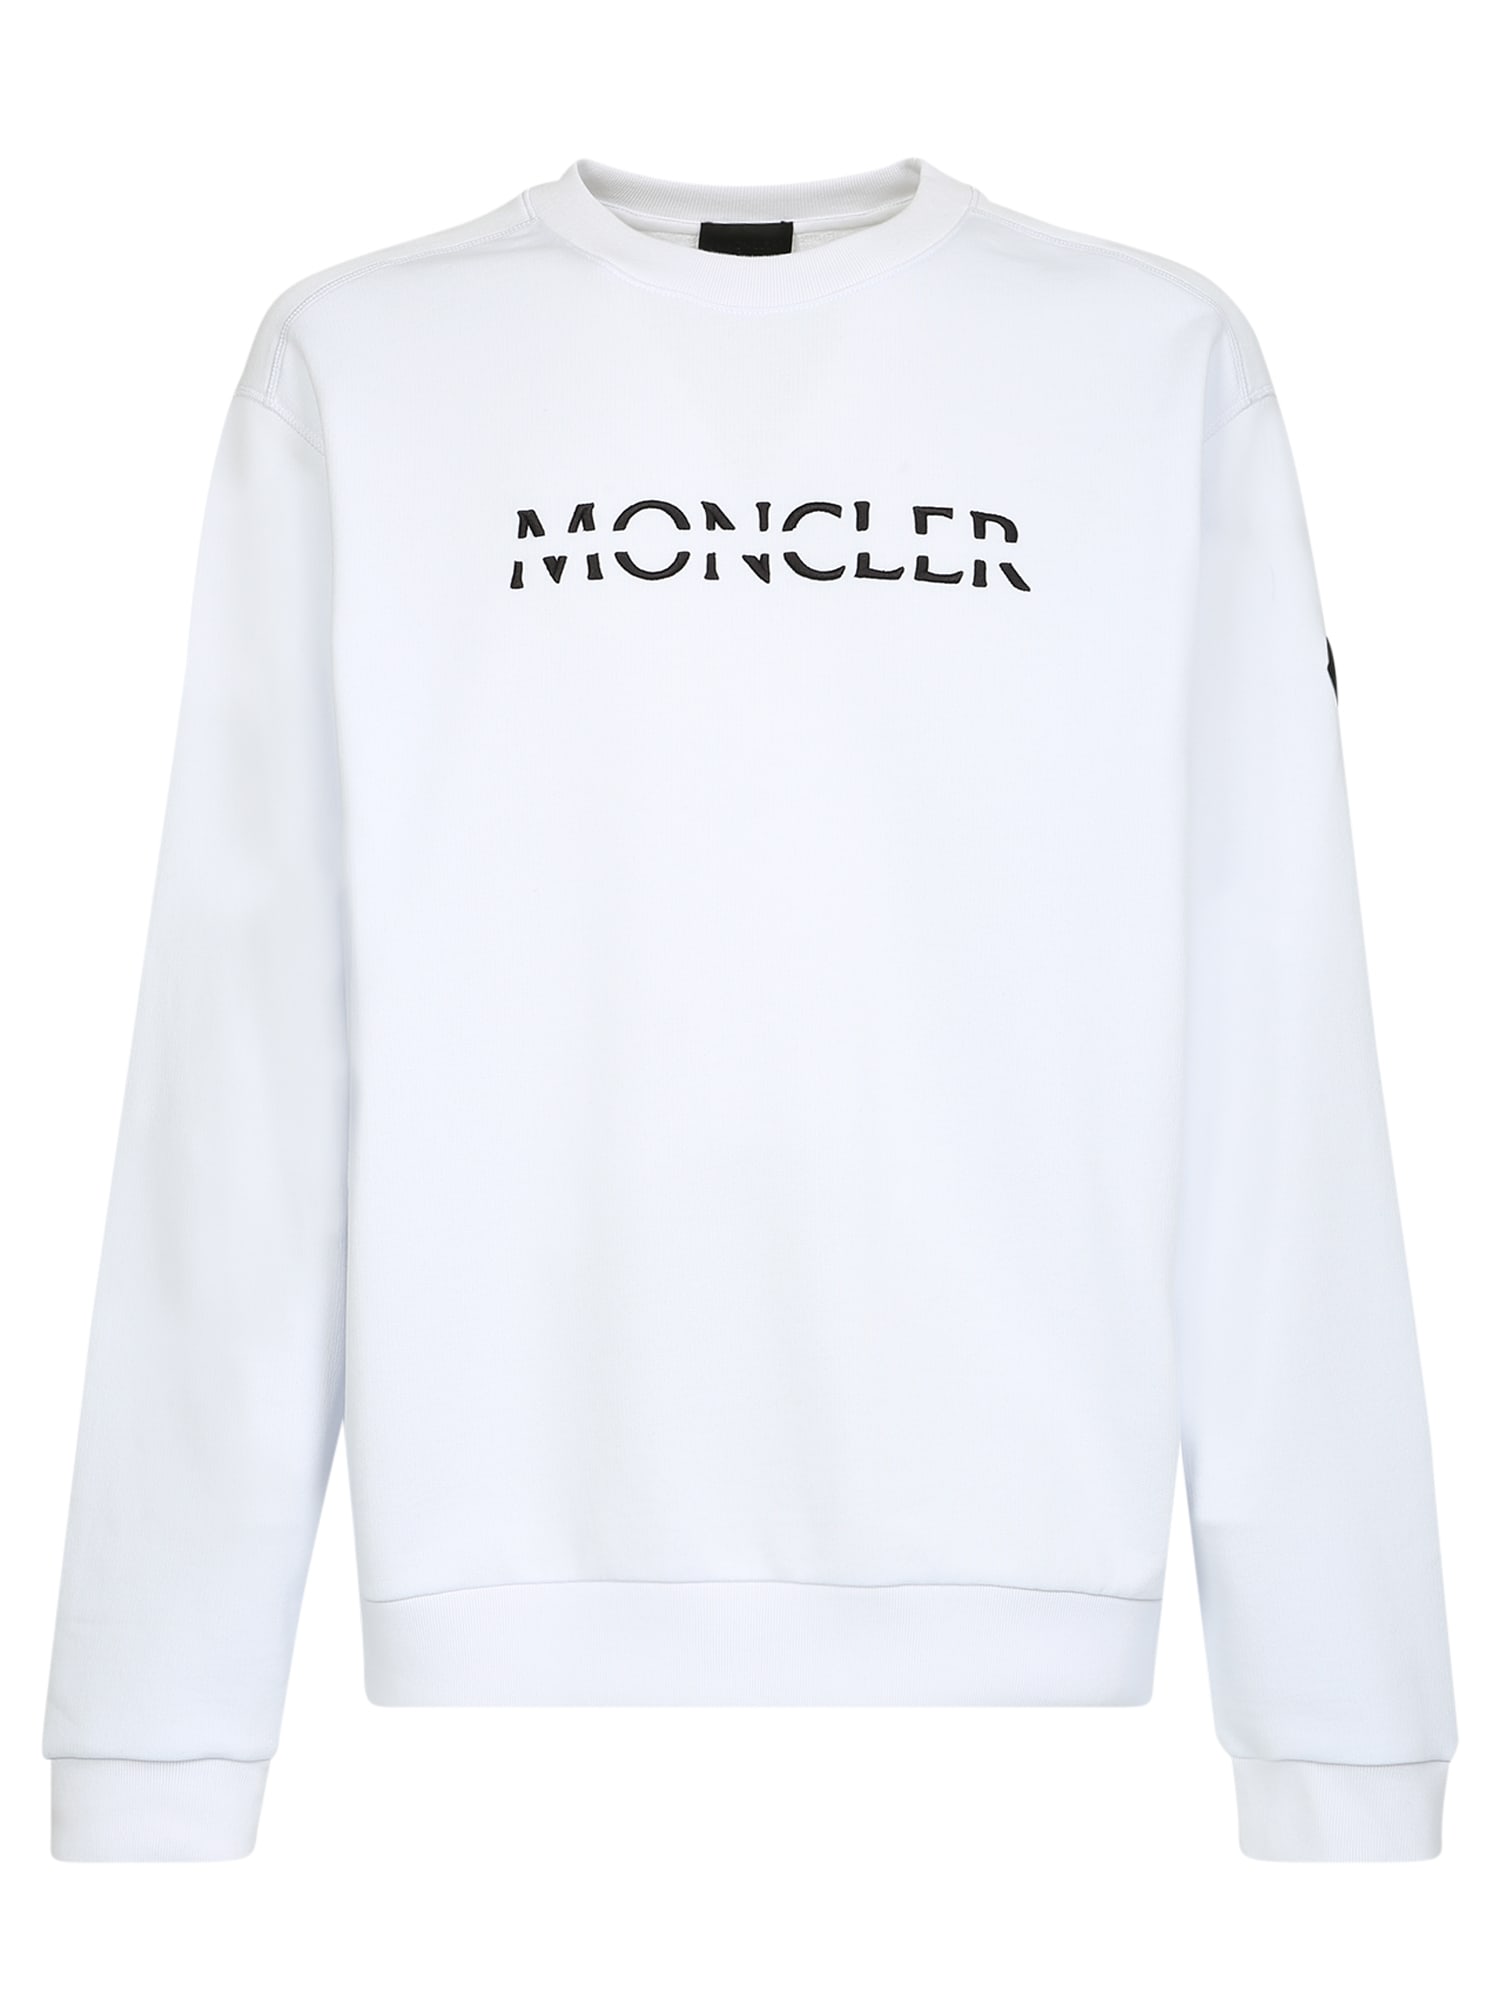 Moncler Sweatshirt With Iconic Moncler Motif